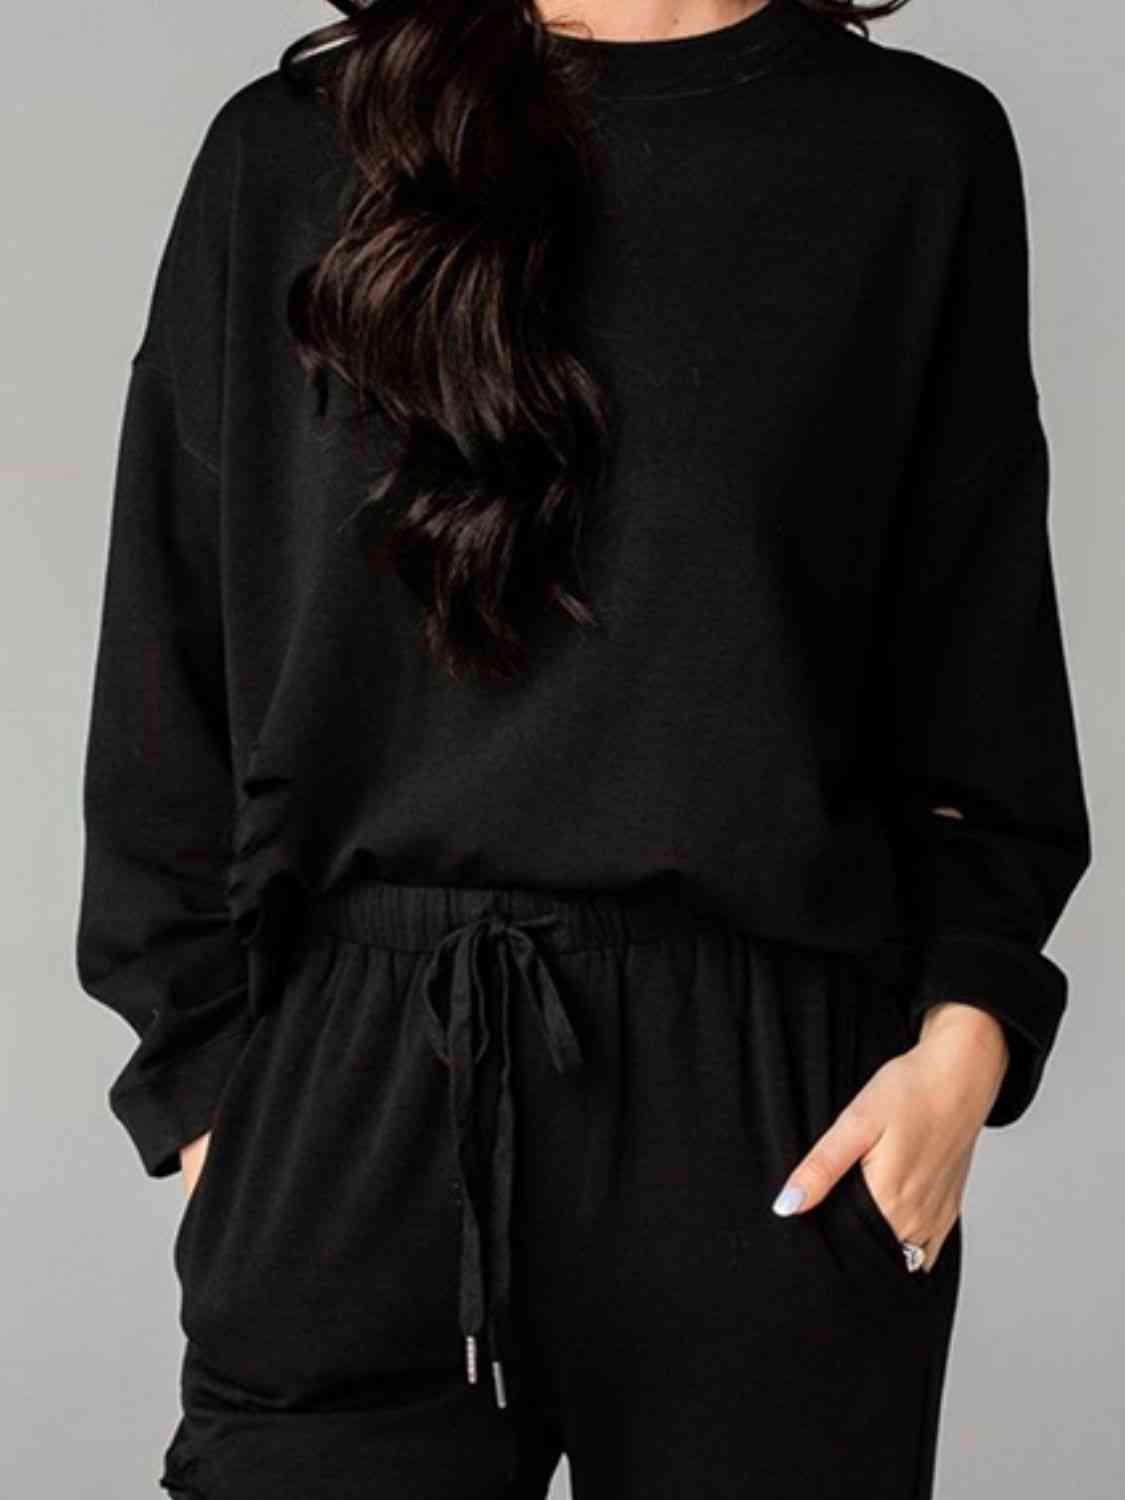 a woman wearing a black sweatshirt and sweatpants